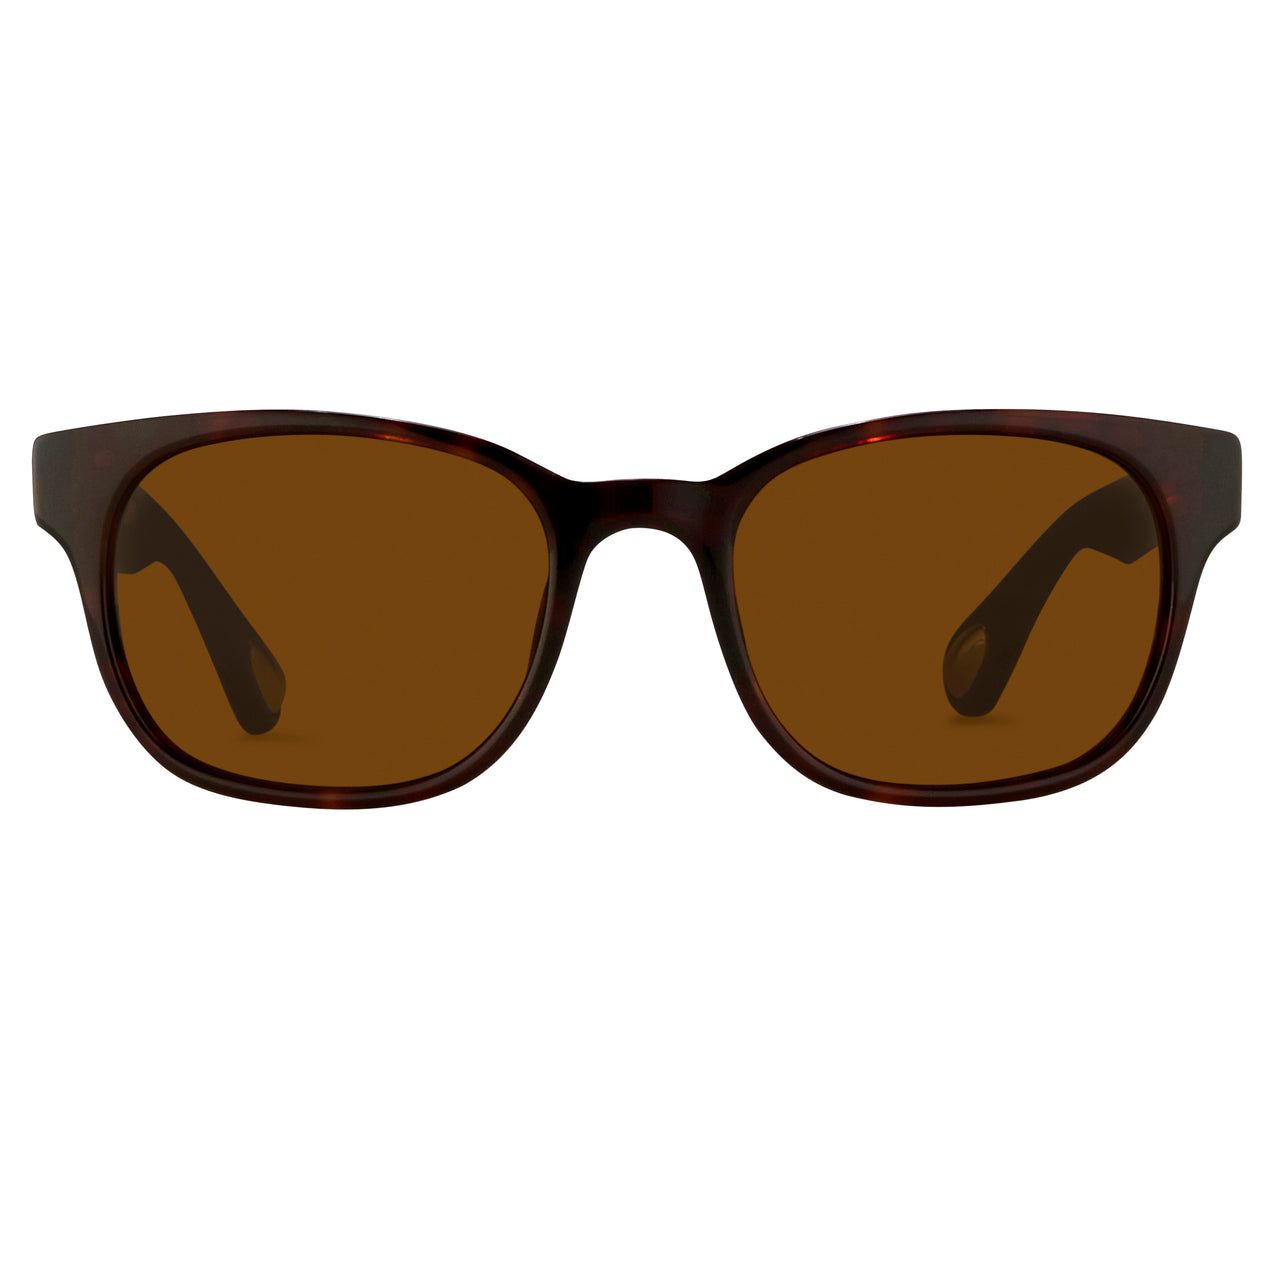 Ann Demeulemeester Sunglasses Rectangular Tortoise Shell and Brown